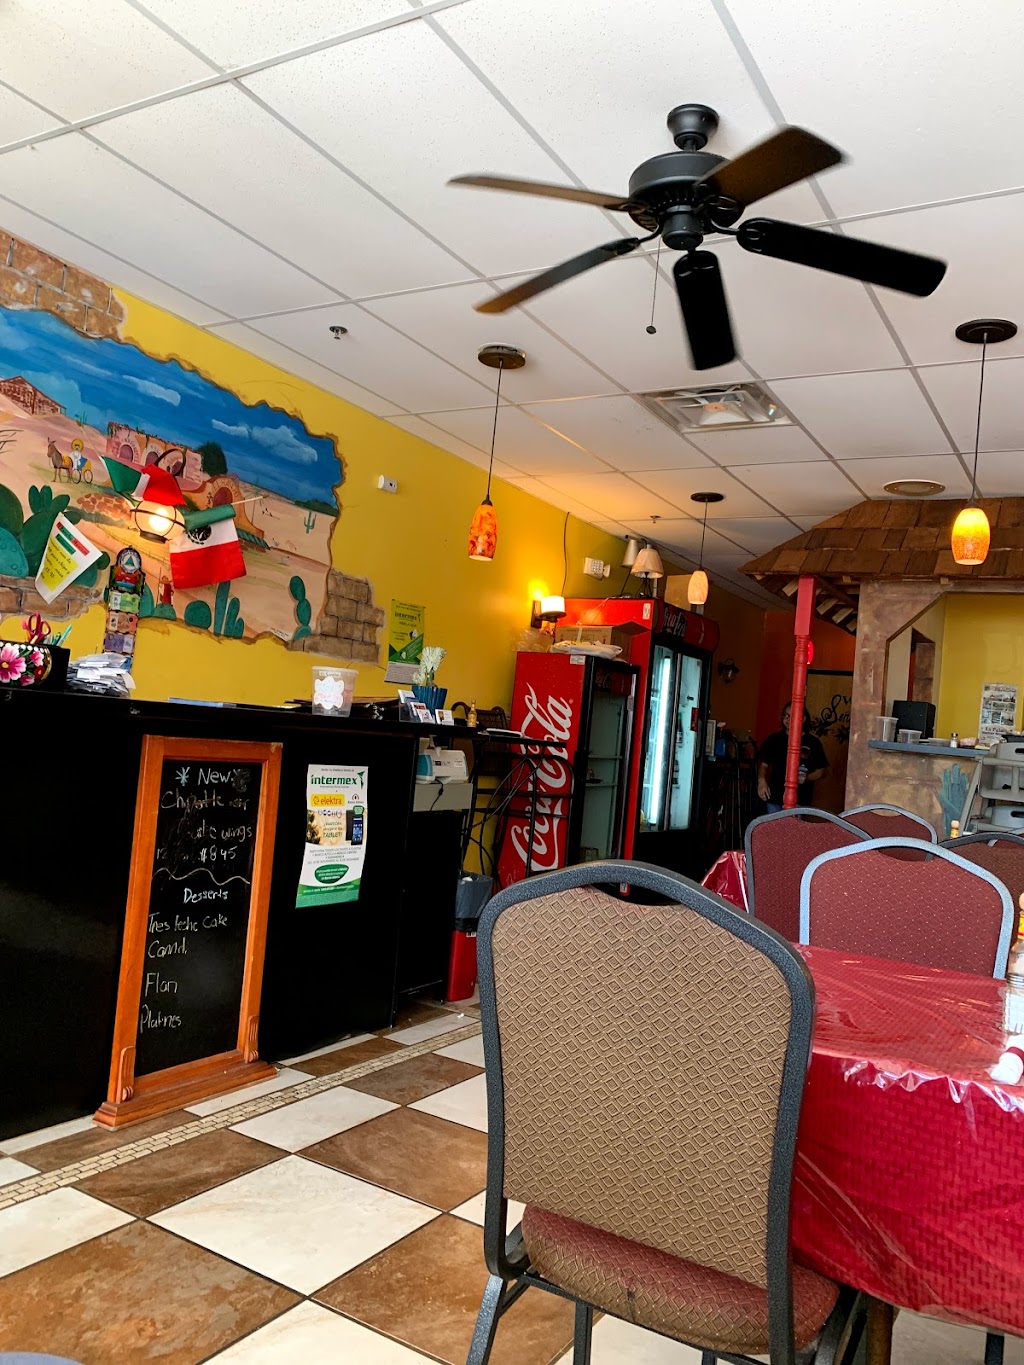 El Rancho Mexican Restaurant | 240 Mathistown Rd, Little Egg Harbor Township, NJ 08087 | Phone: (609) 812-1700